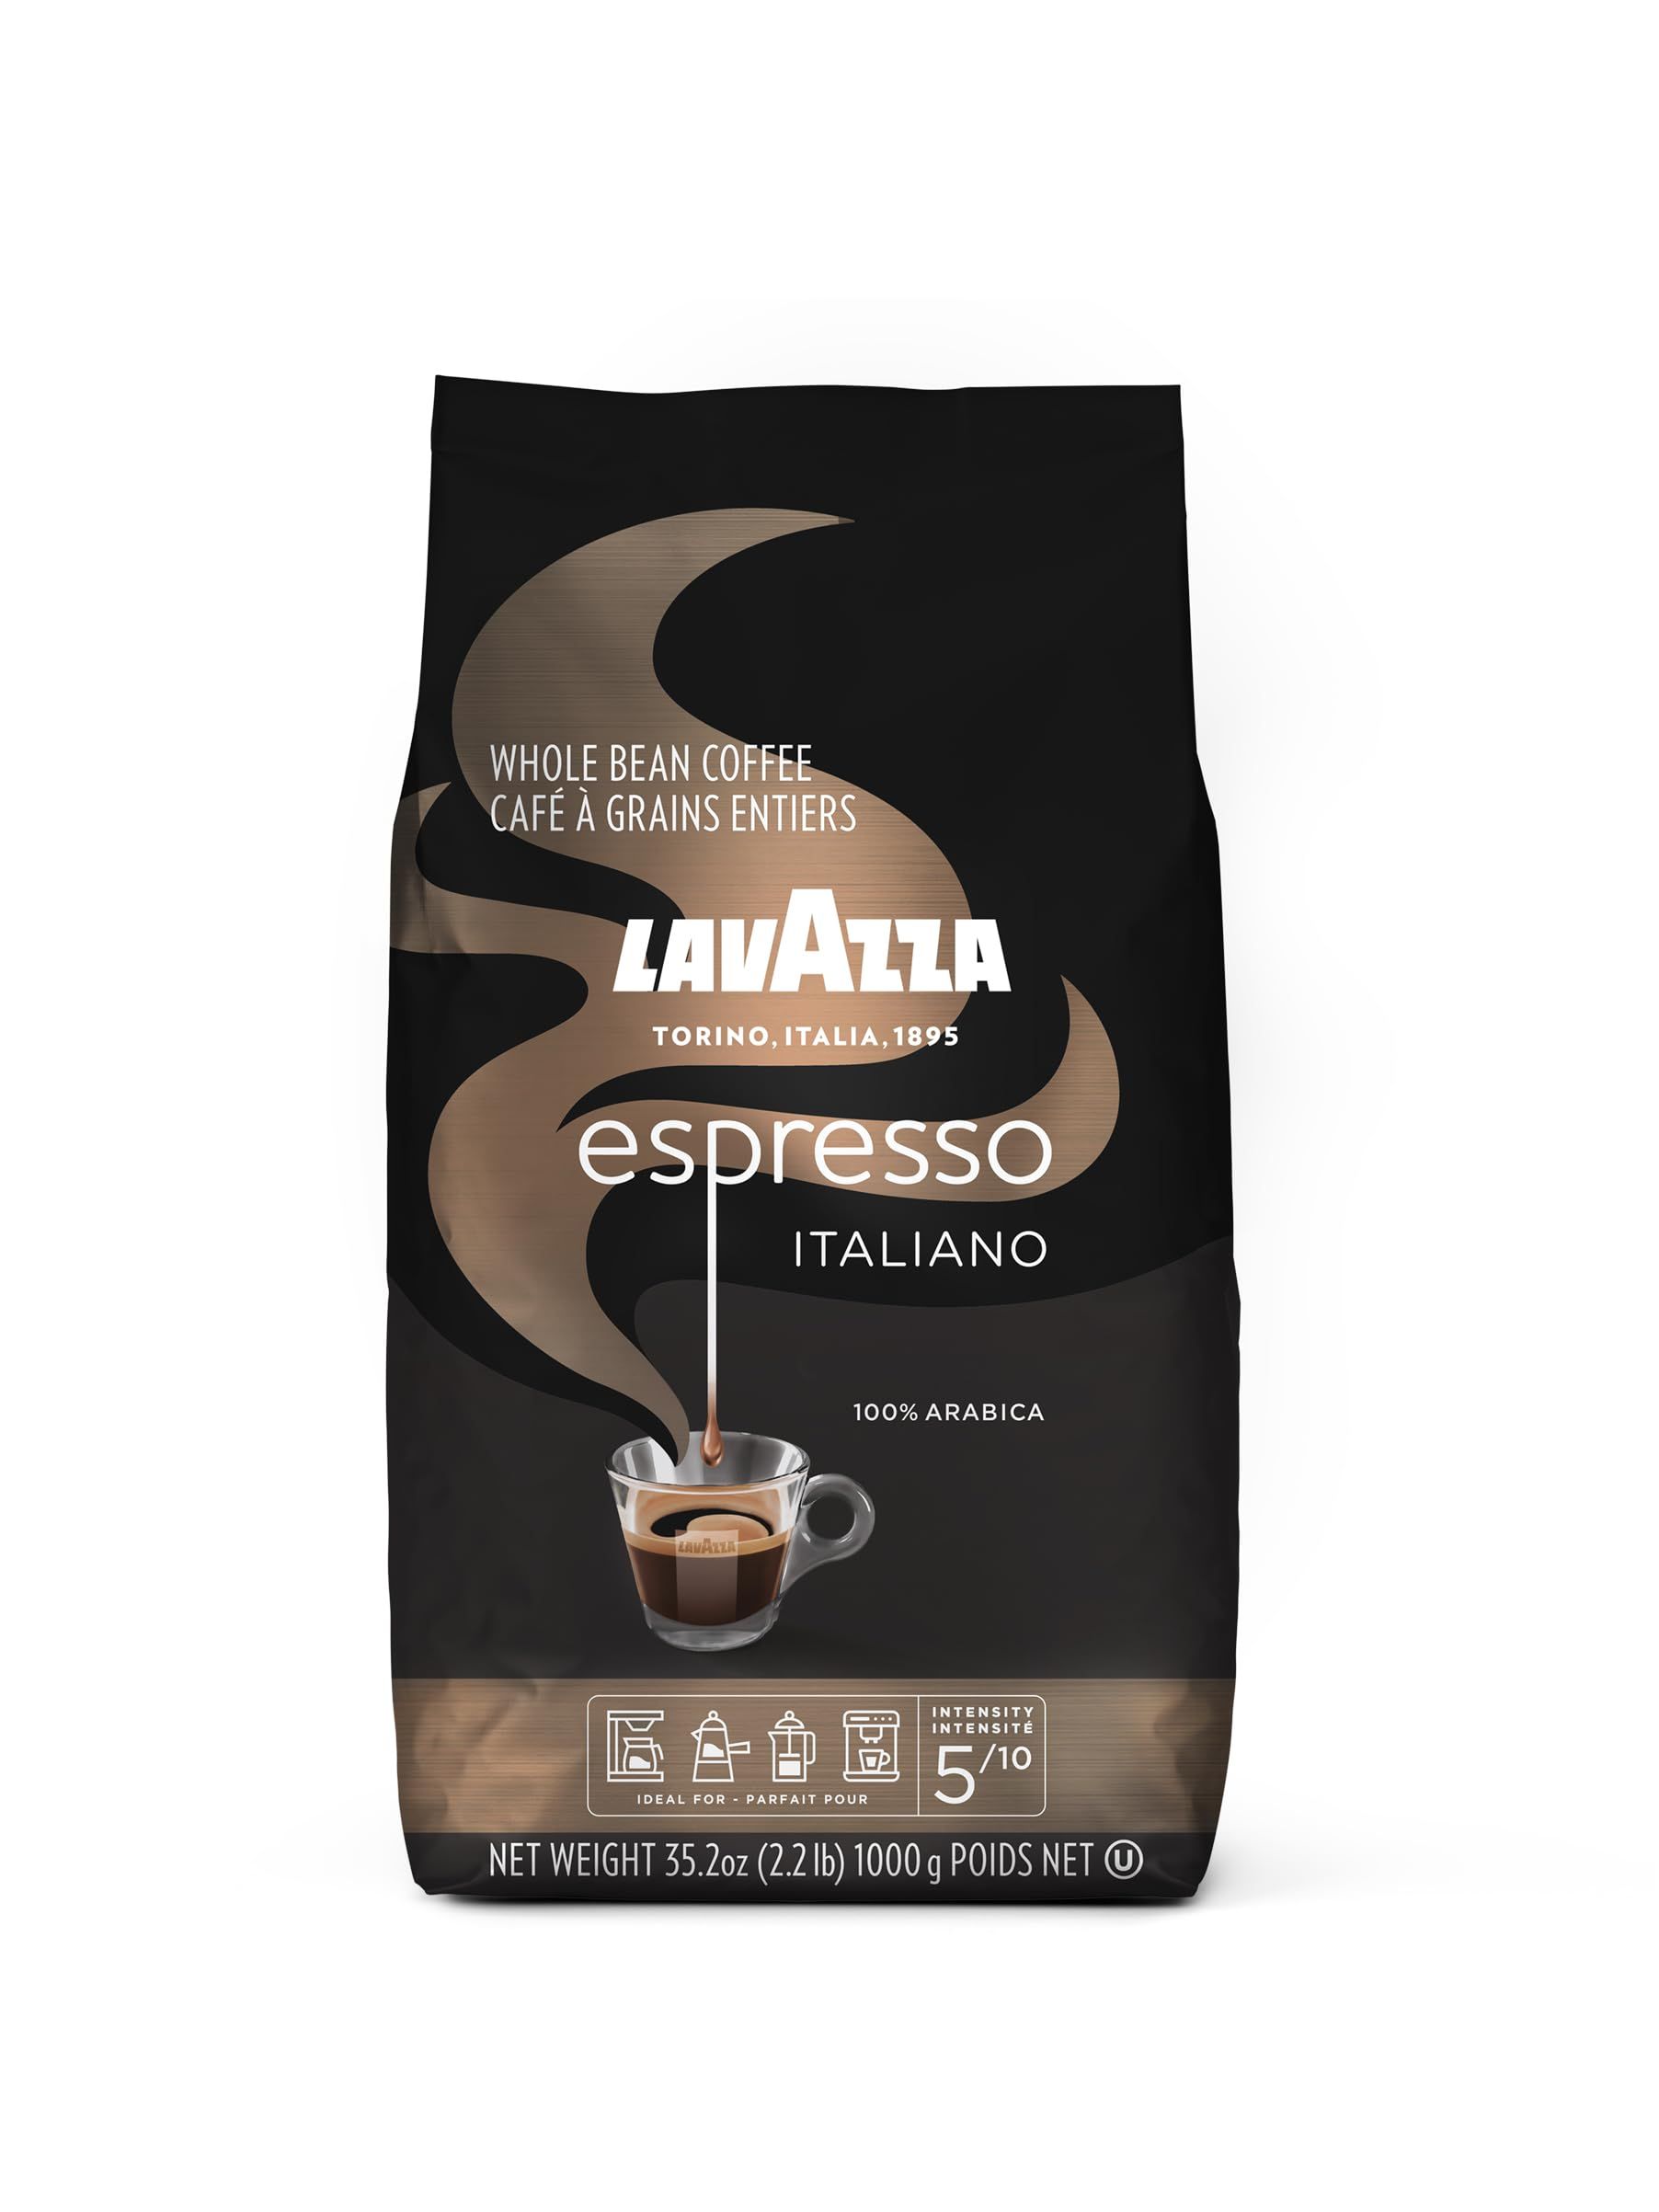 Lavazza Espresso Italiano Whole Bean Coffee Blend, Medium Roast, 2.2 Pound Bag (Packaging May Vary) Premium Quality, Non GMO, 100% Arabica, Rich bodied | Amazon (US)